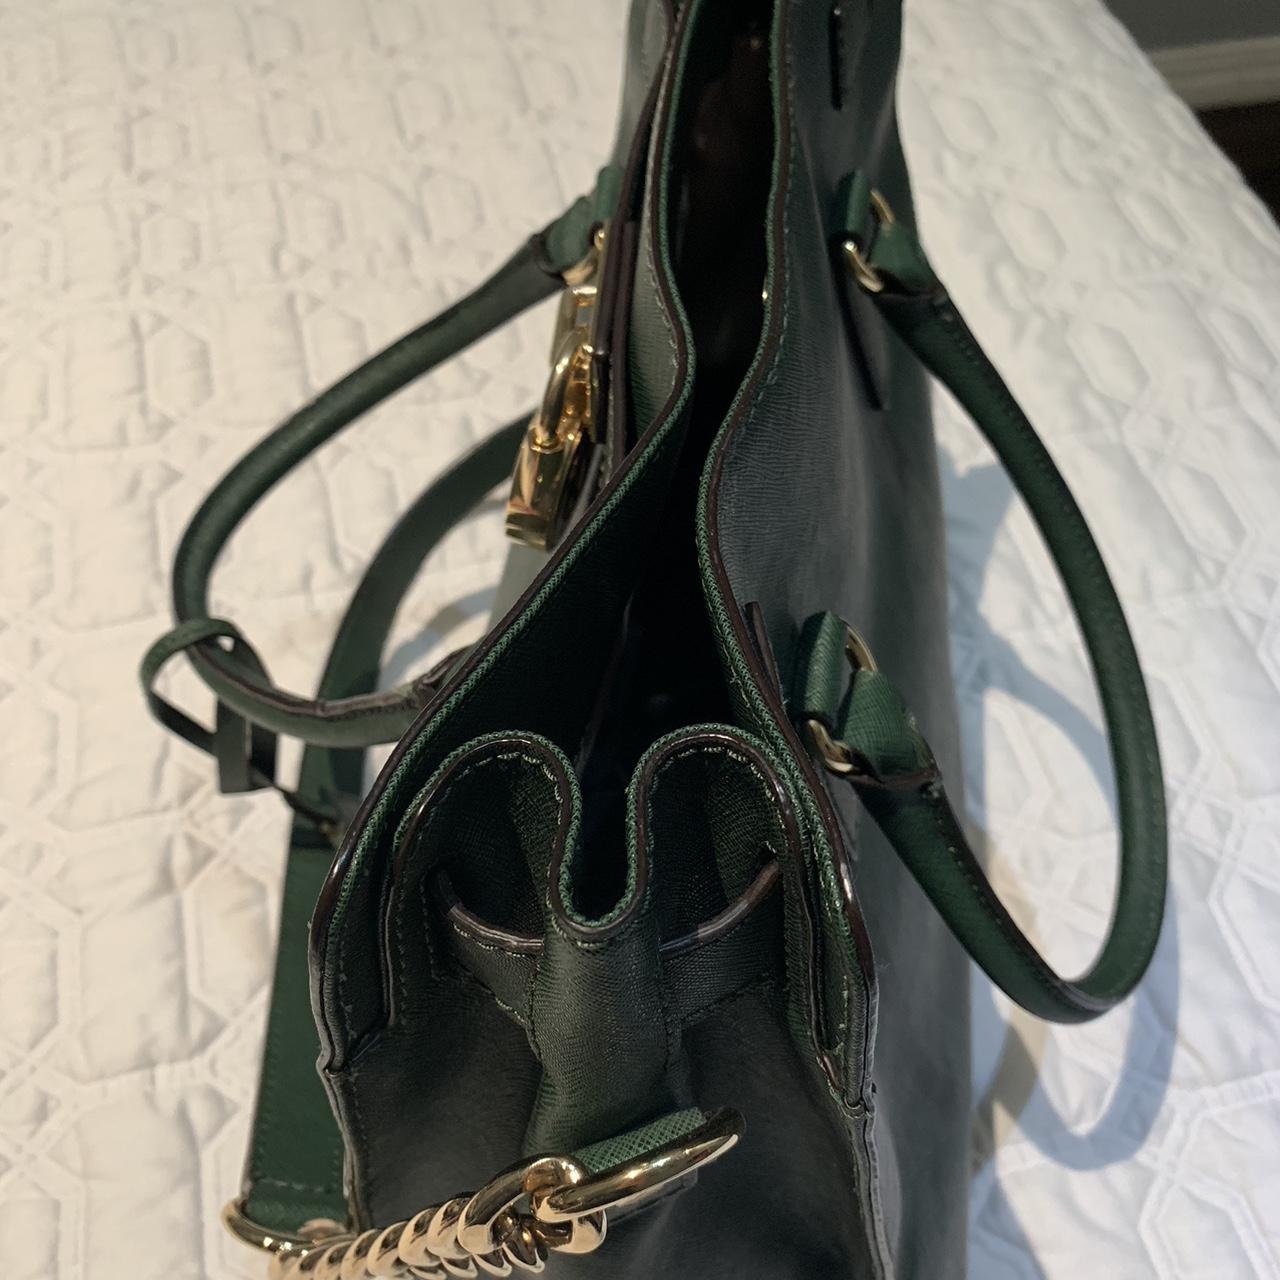 Michael Kors Cece Jewel Green Leather Studs Satchel Shoulder Bag - NWT $628  | eBay